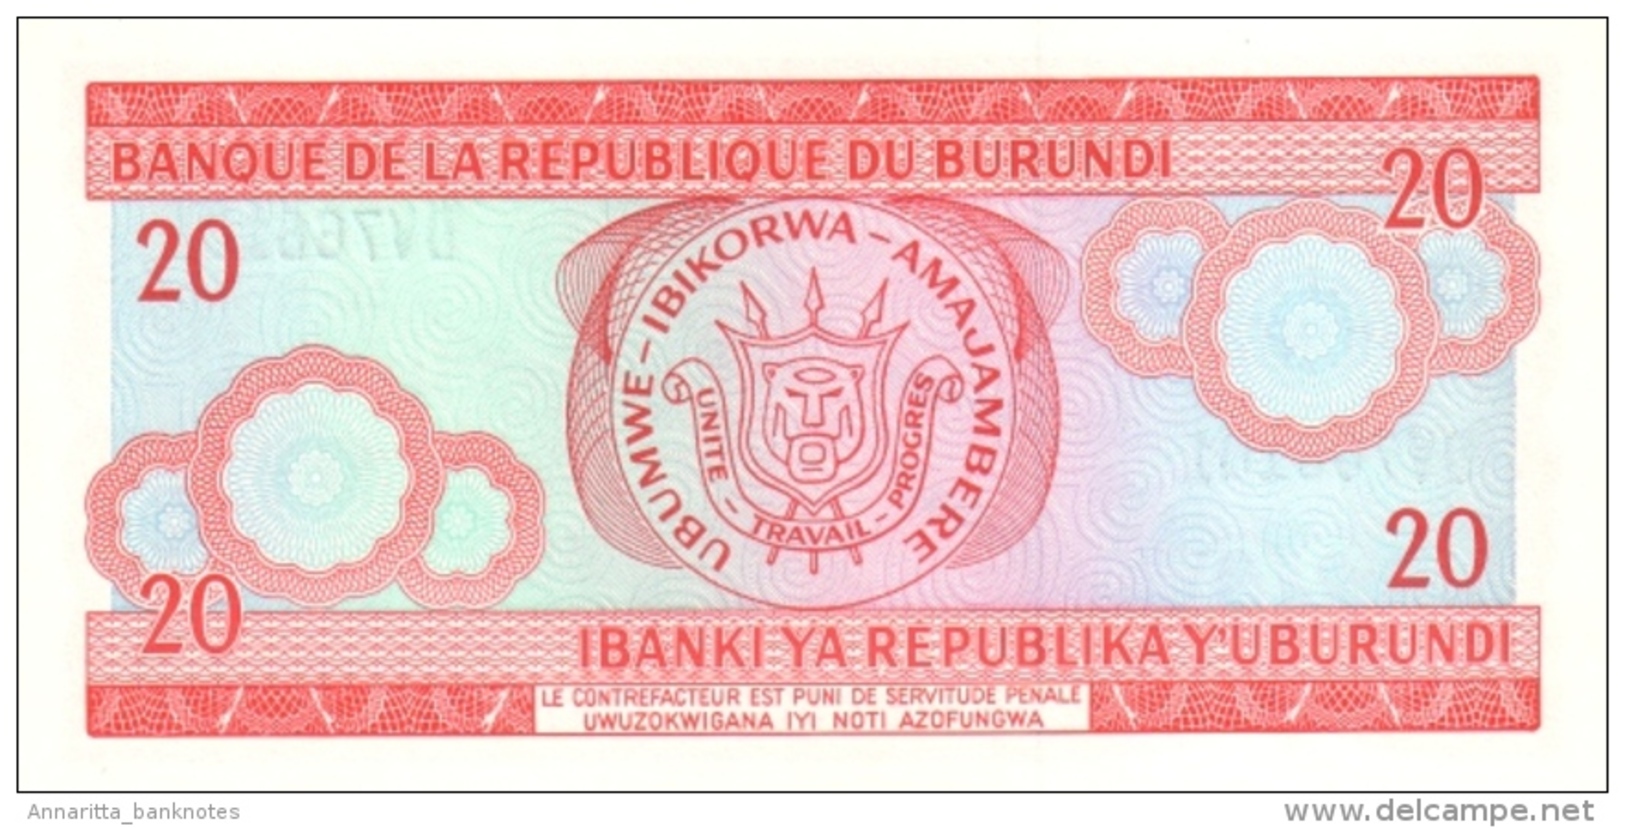 Burundi (BRB) 20 Francs 2007 UNC Cat No. P-27d / BI215n - Burundi